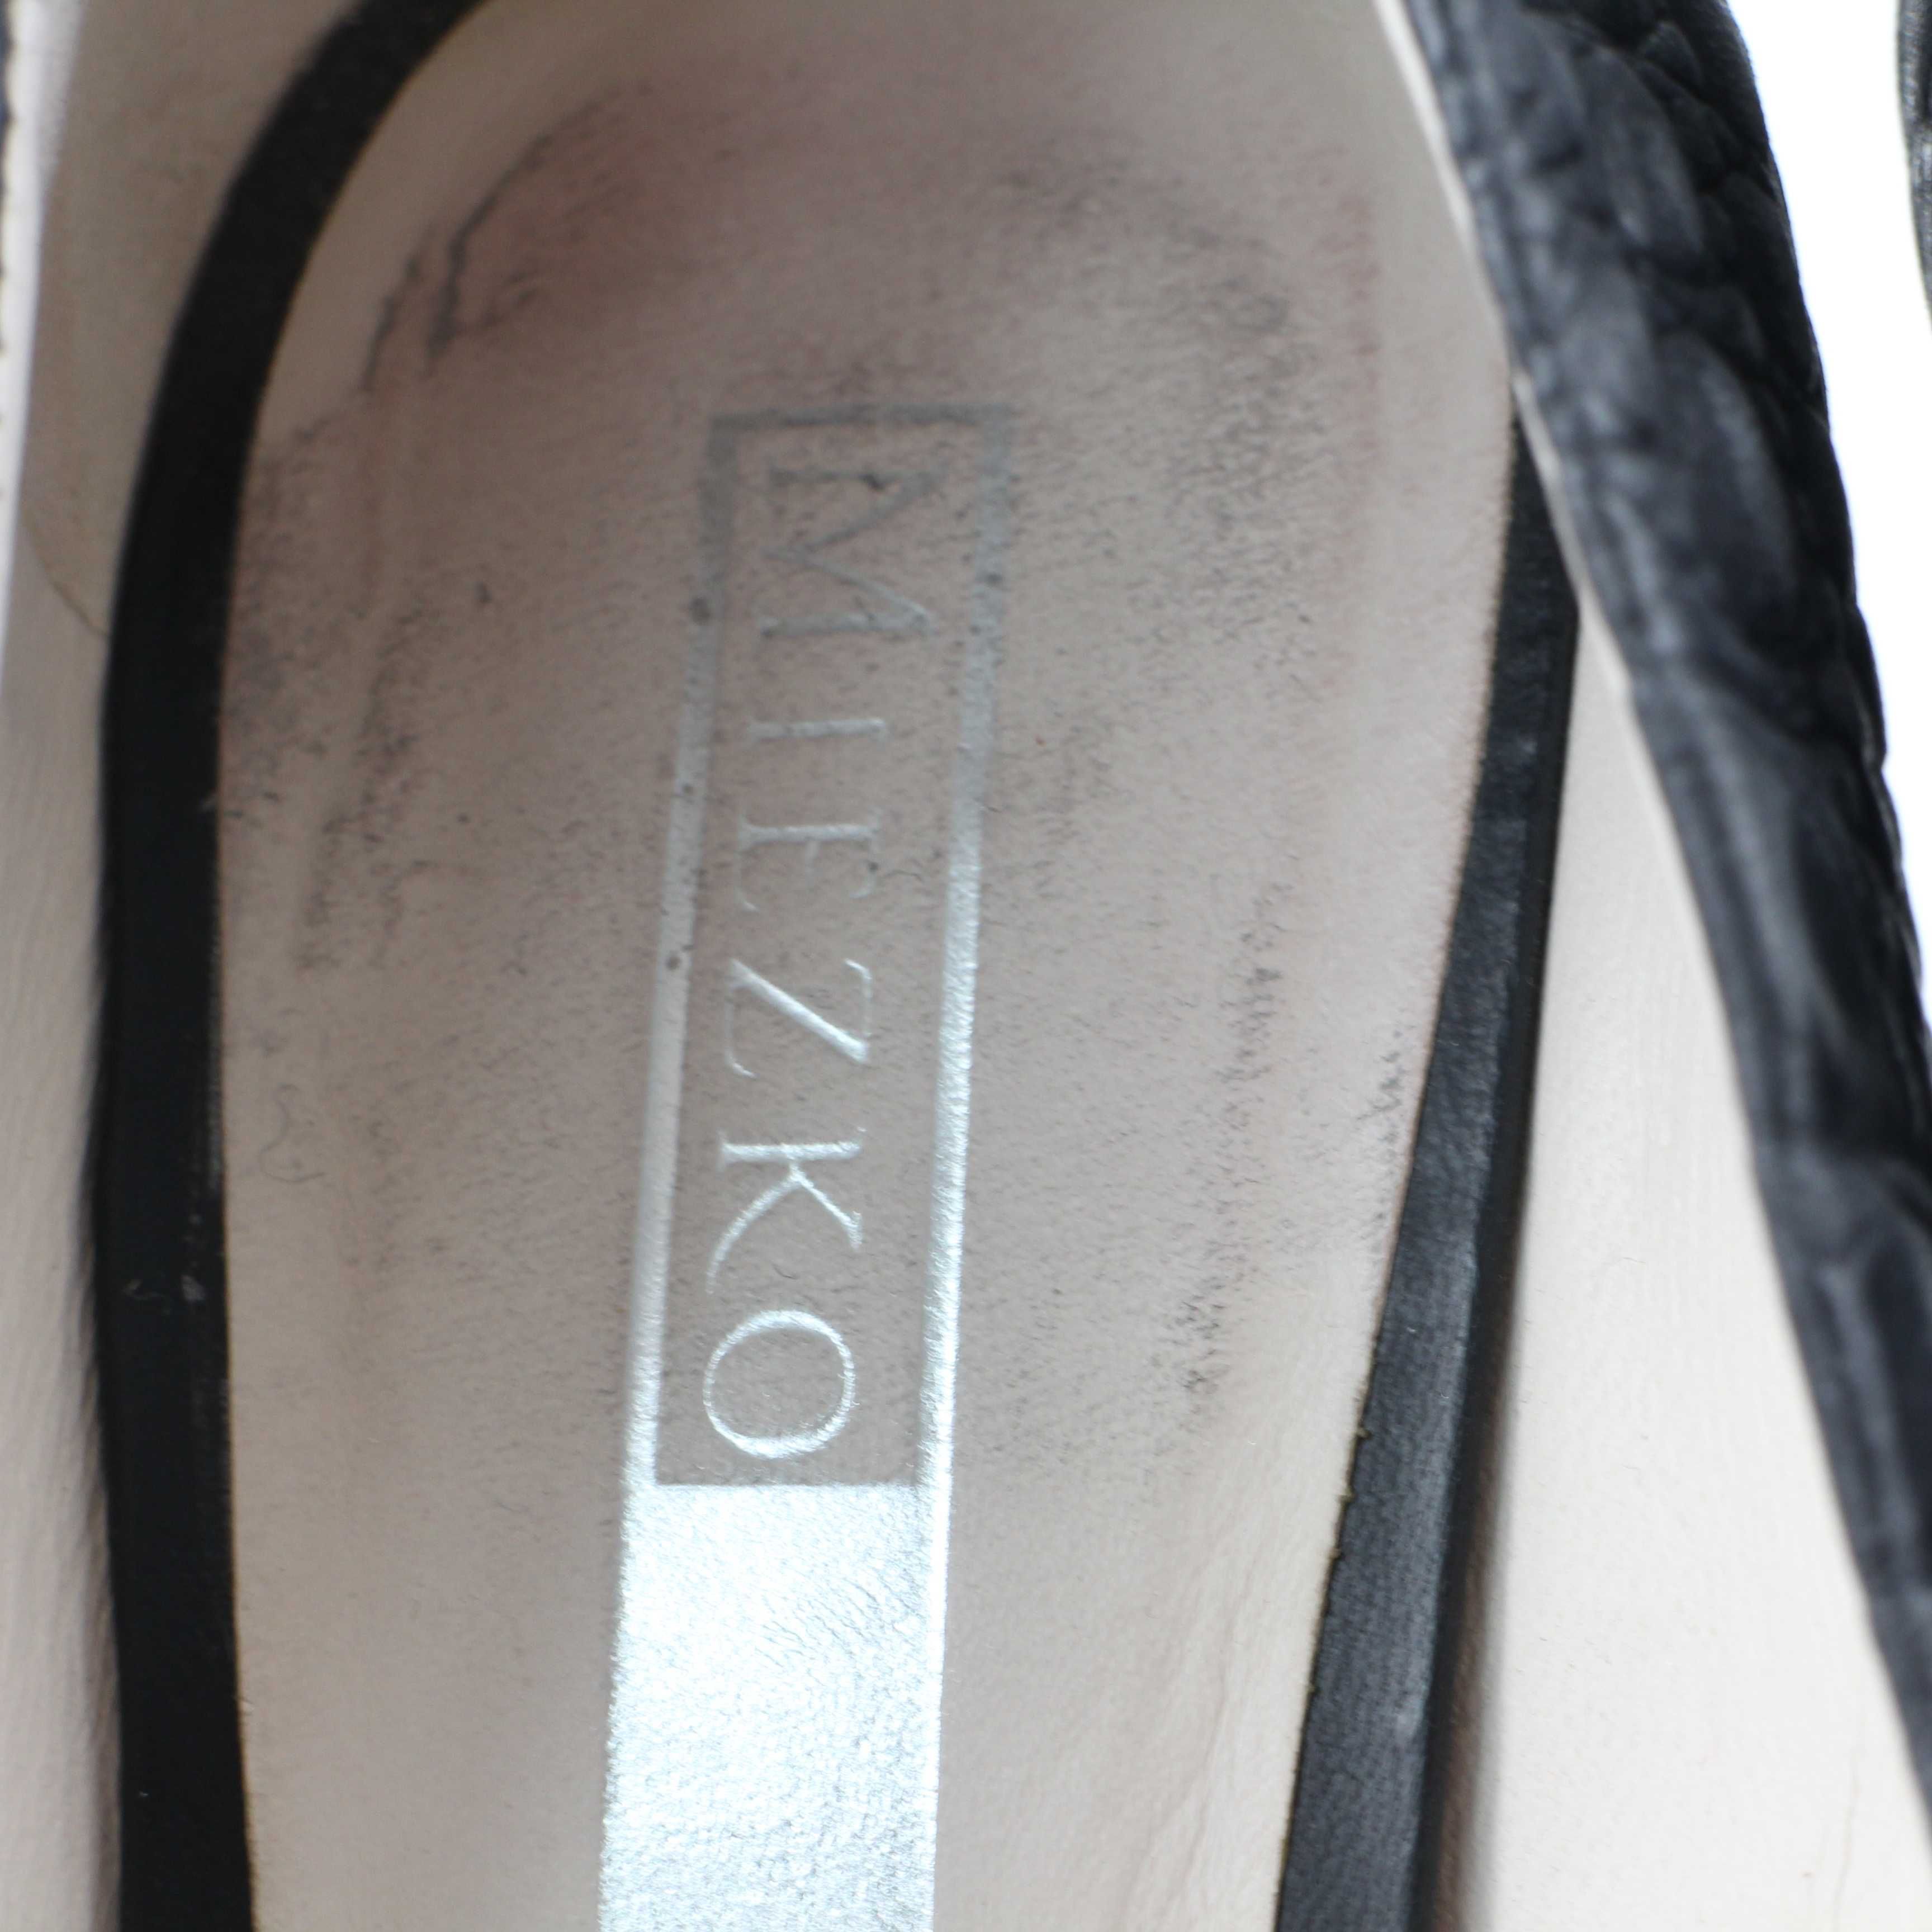 Pantofi Miezko, piele naturala integral (interior, exterior, talpa)